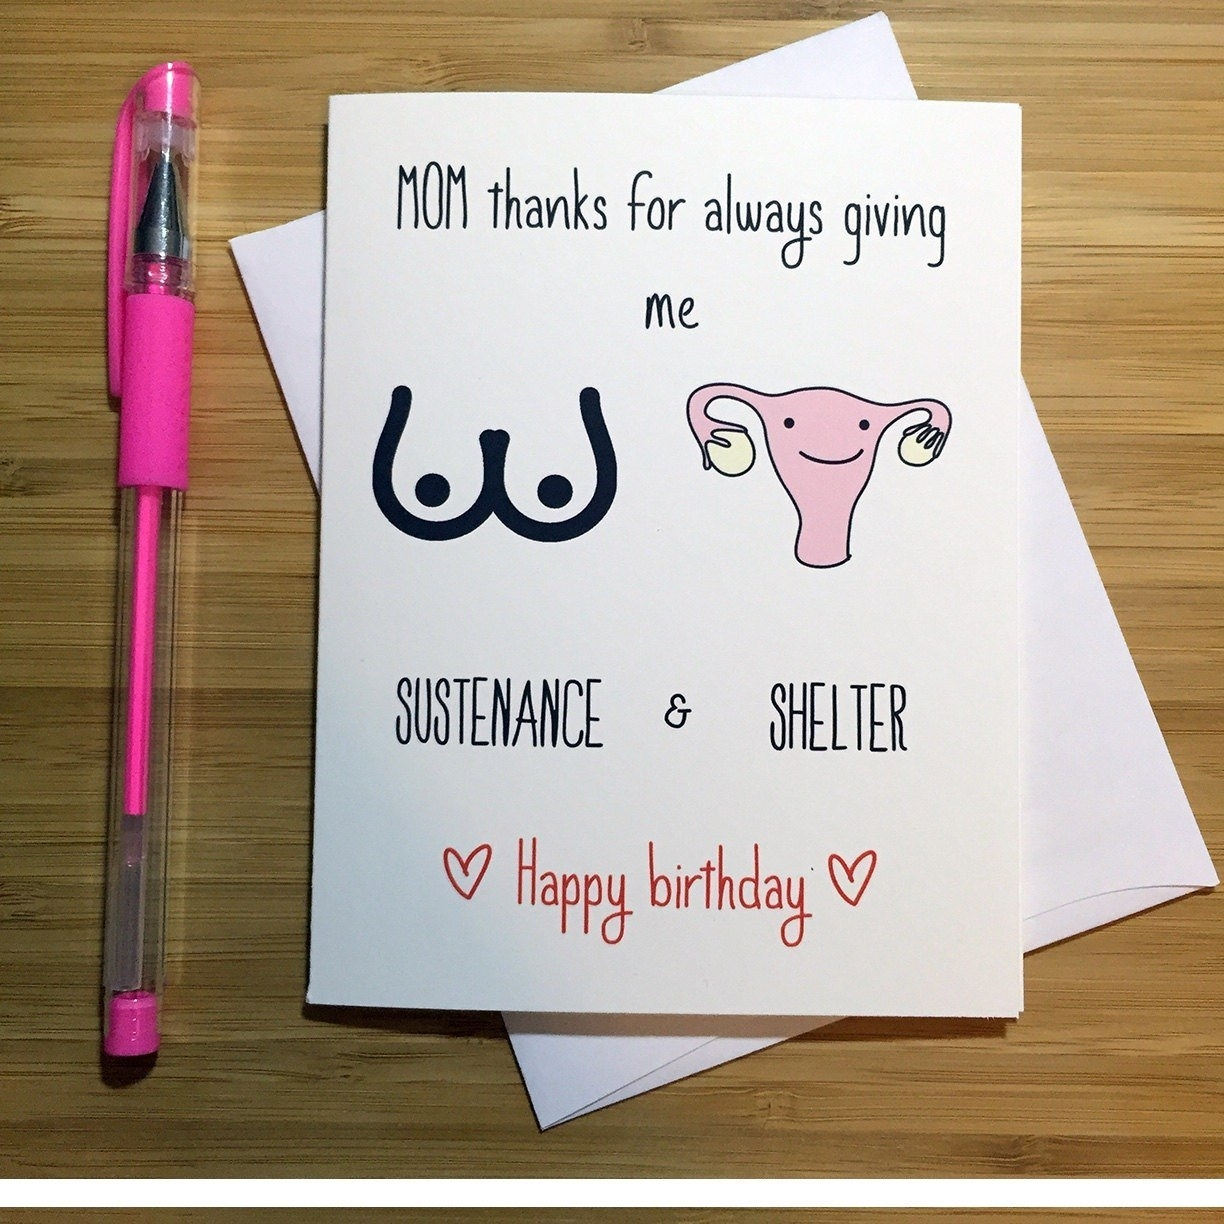 Handmade Birthday Card Ideas For Mom 97 Homemade Birthday Gifts For Mom 17 Diy Gift Ideas For Your Mom